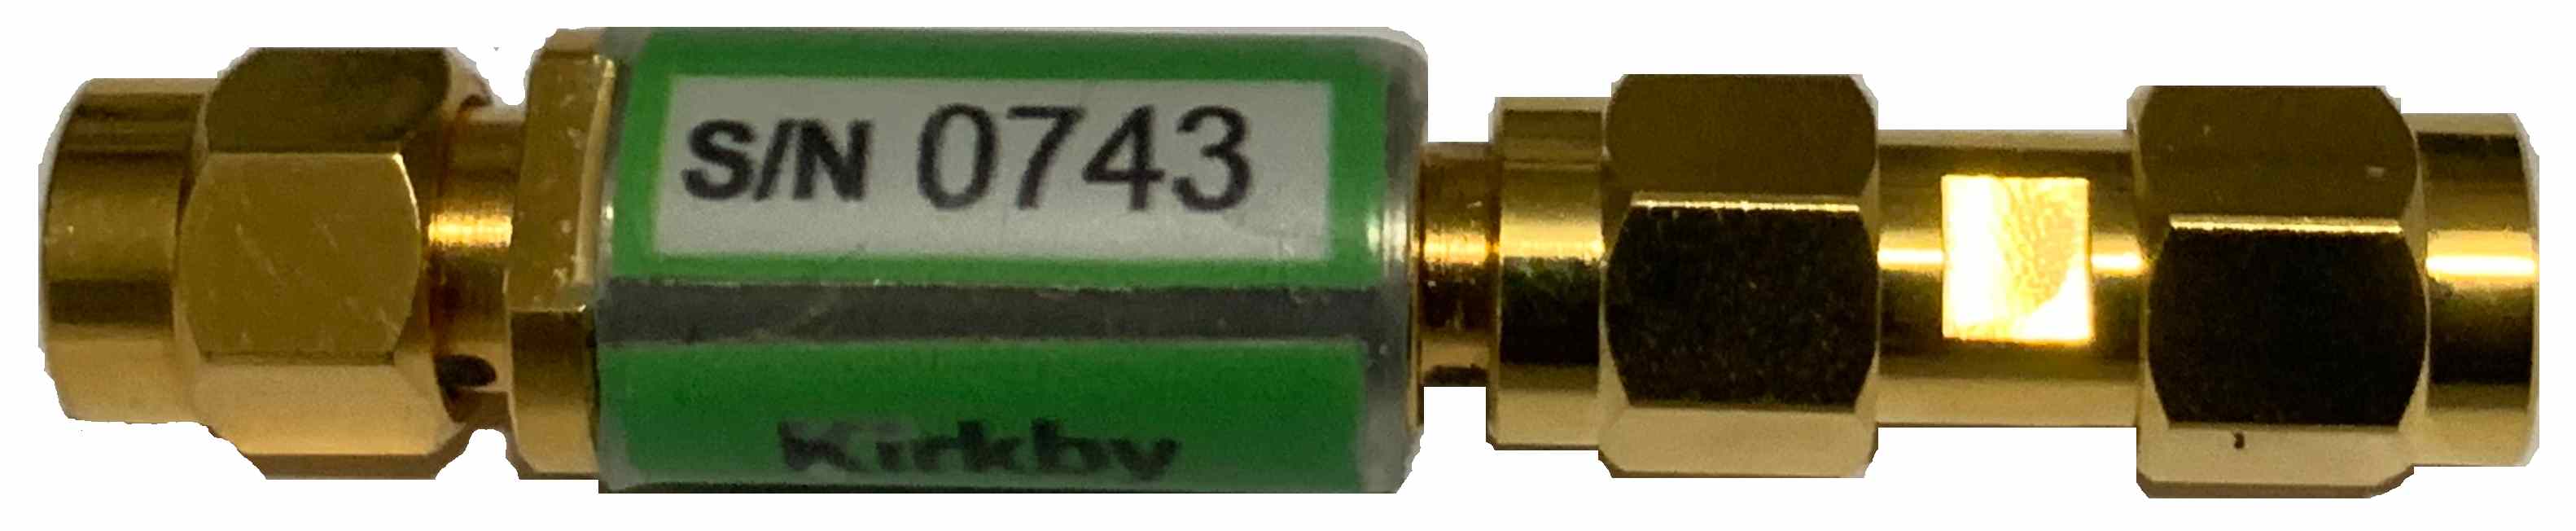 SMA verification attenuator with two male connectors